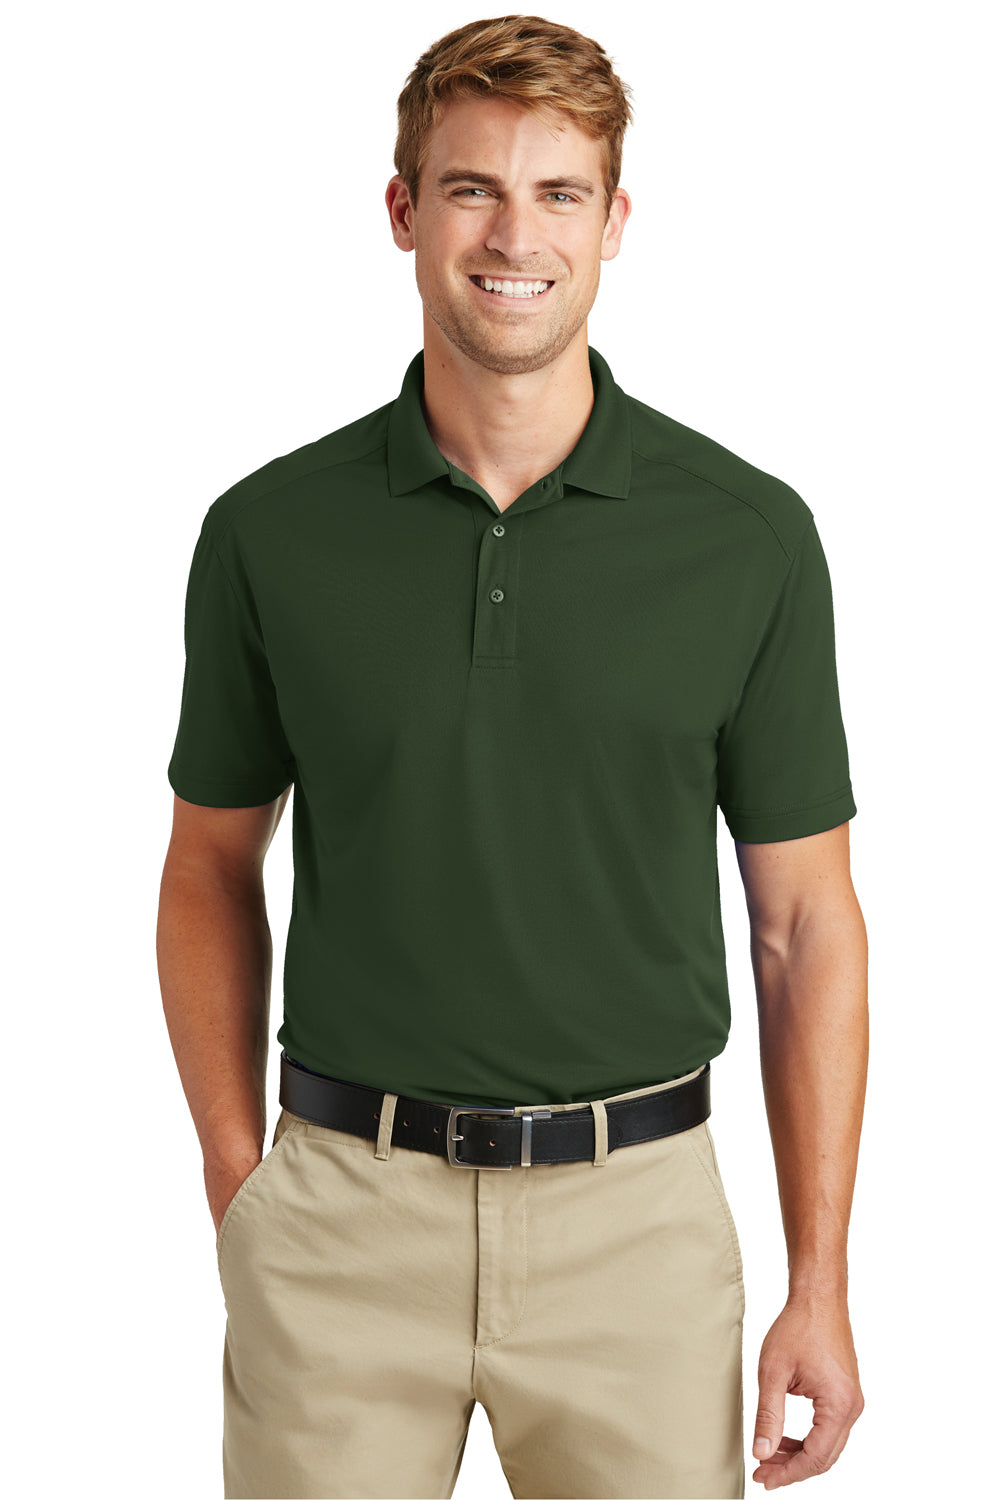 CornerStone CS418 Mens Select Moisture Wicking Short Sleeve Polo Shirt Dark Green Front